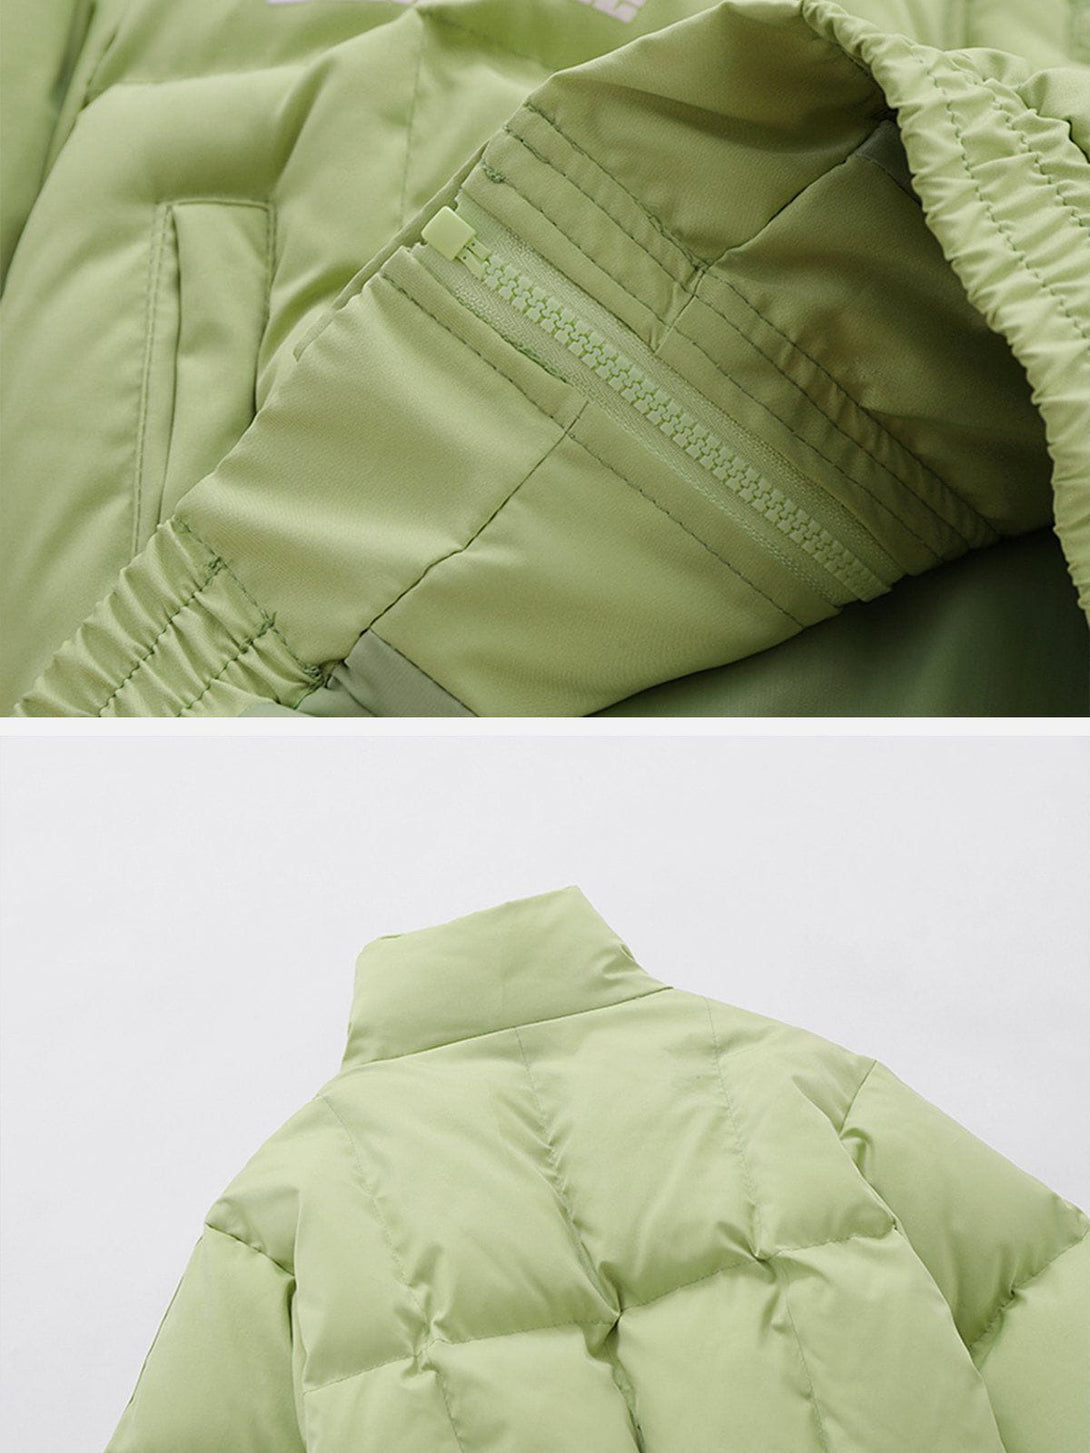 Majesda® - Vintage Simple Letter Print Winter Coat outfit ideas, streetwear fashion - majesda.com